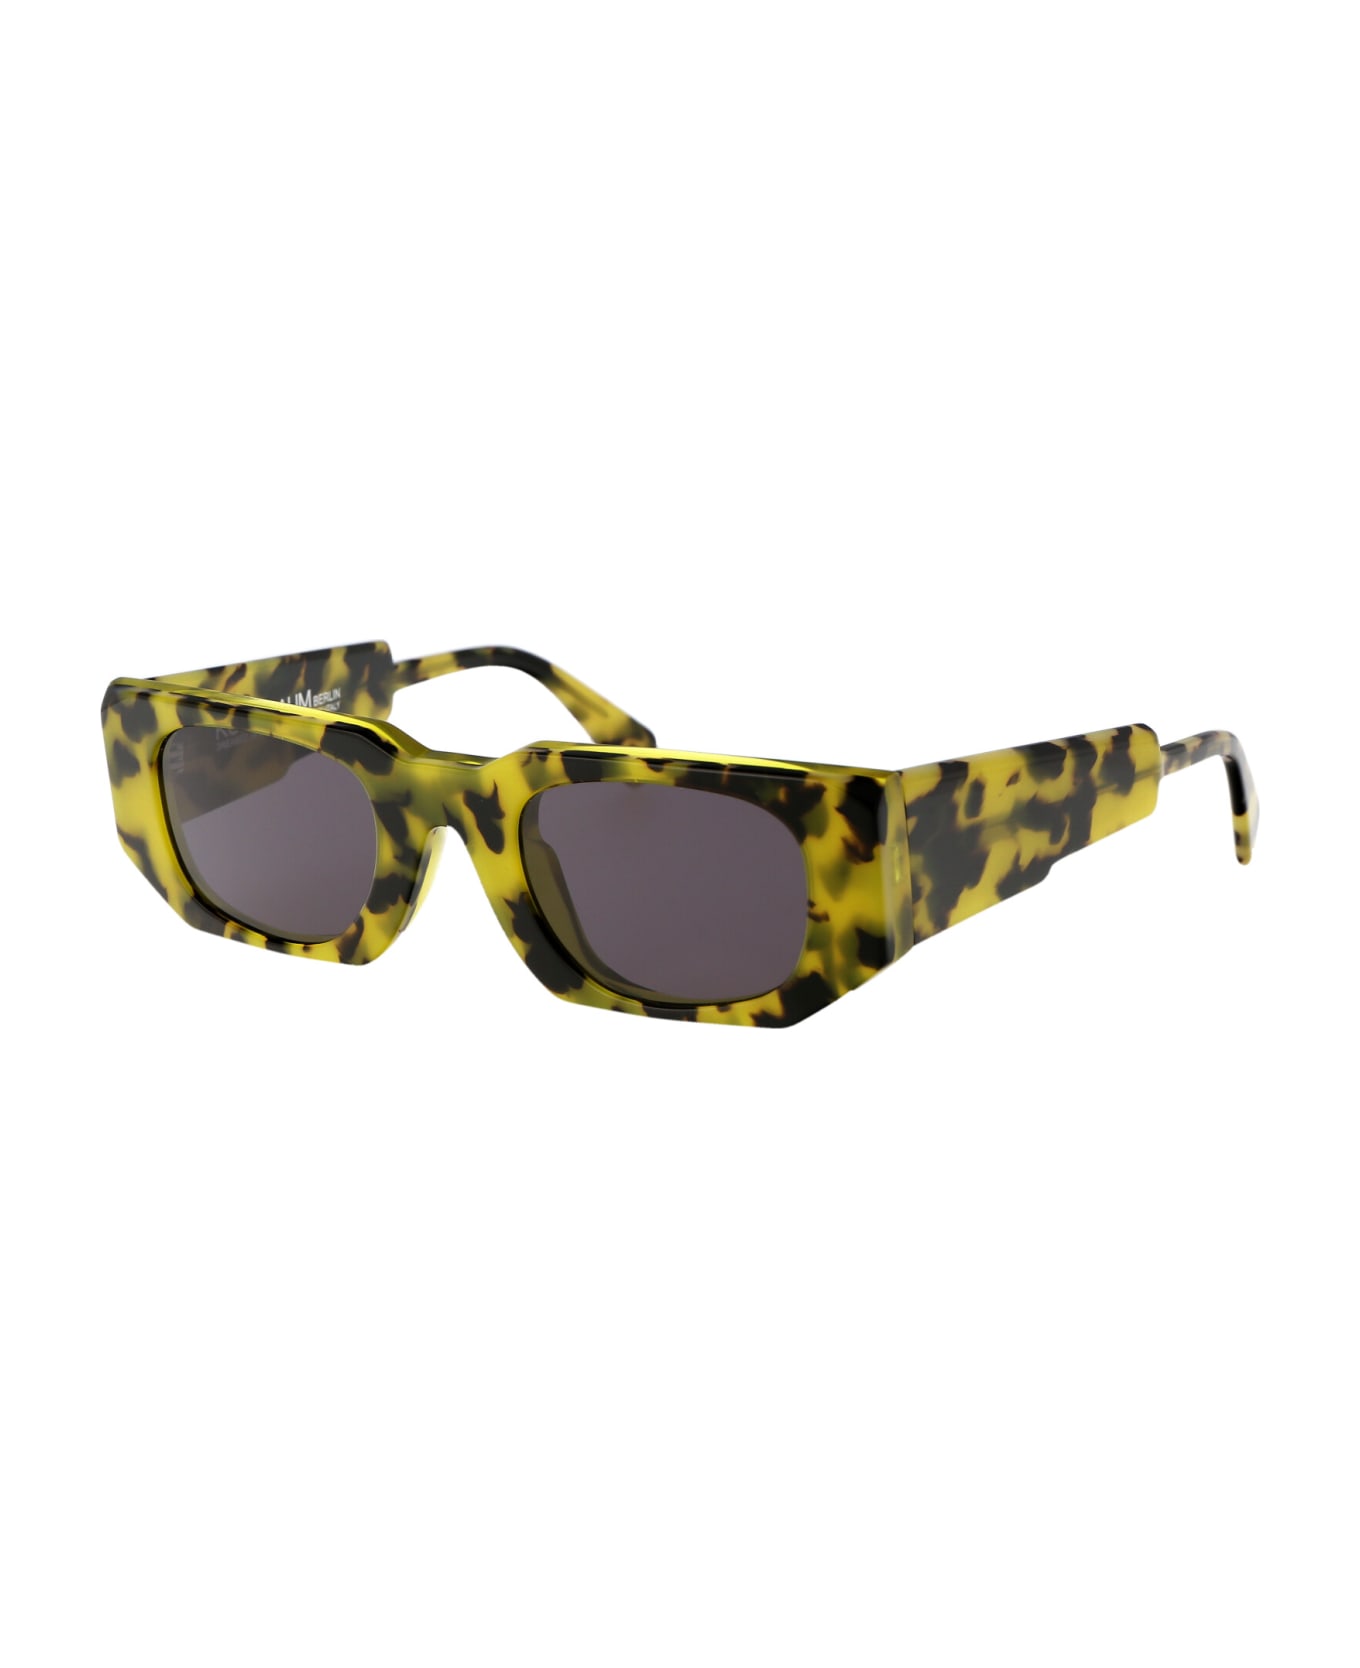 Kuboraum Maske U8 Sunglasses - YWH grey